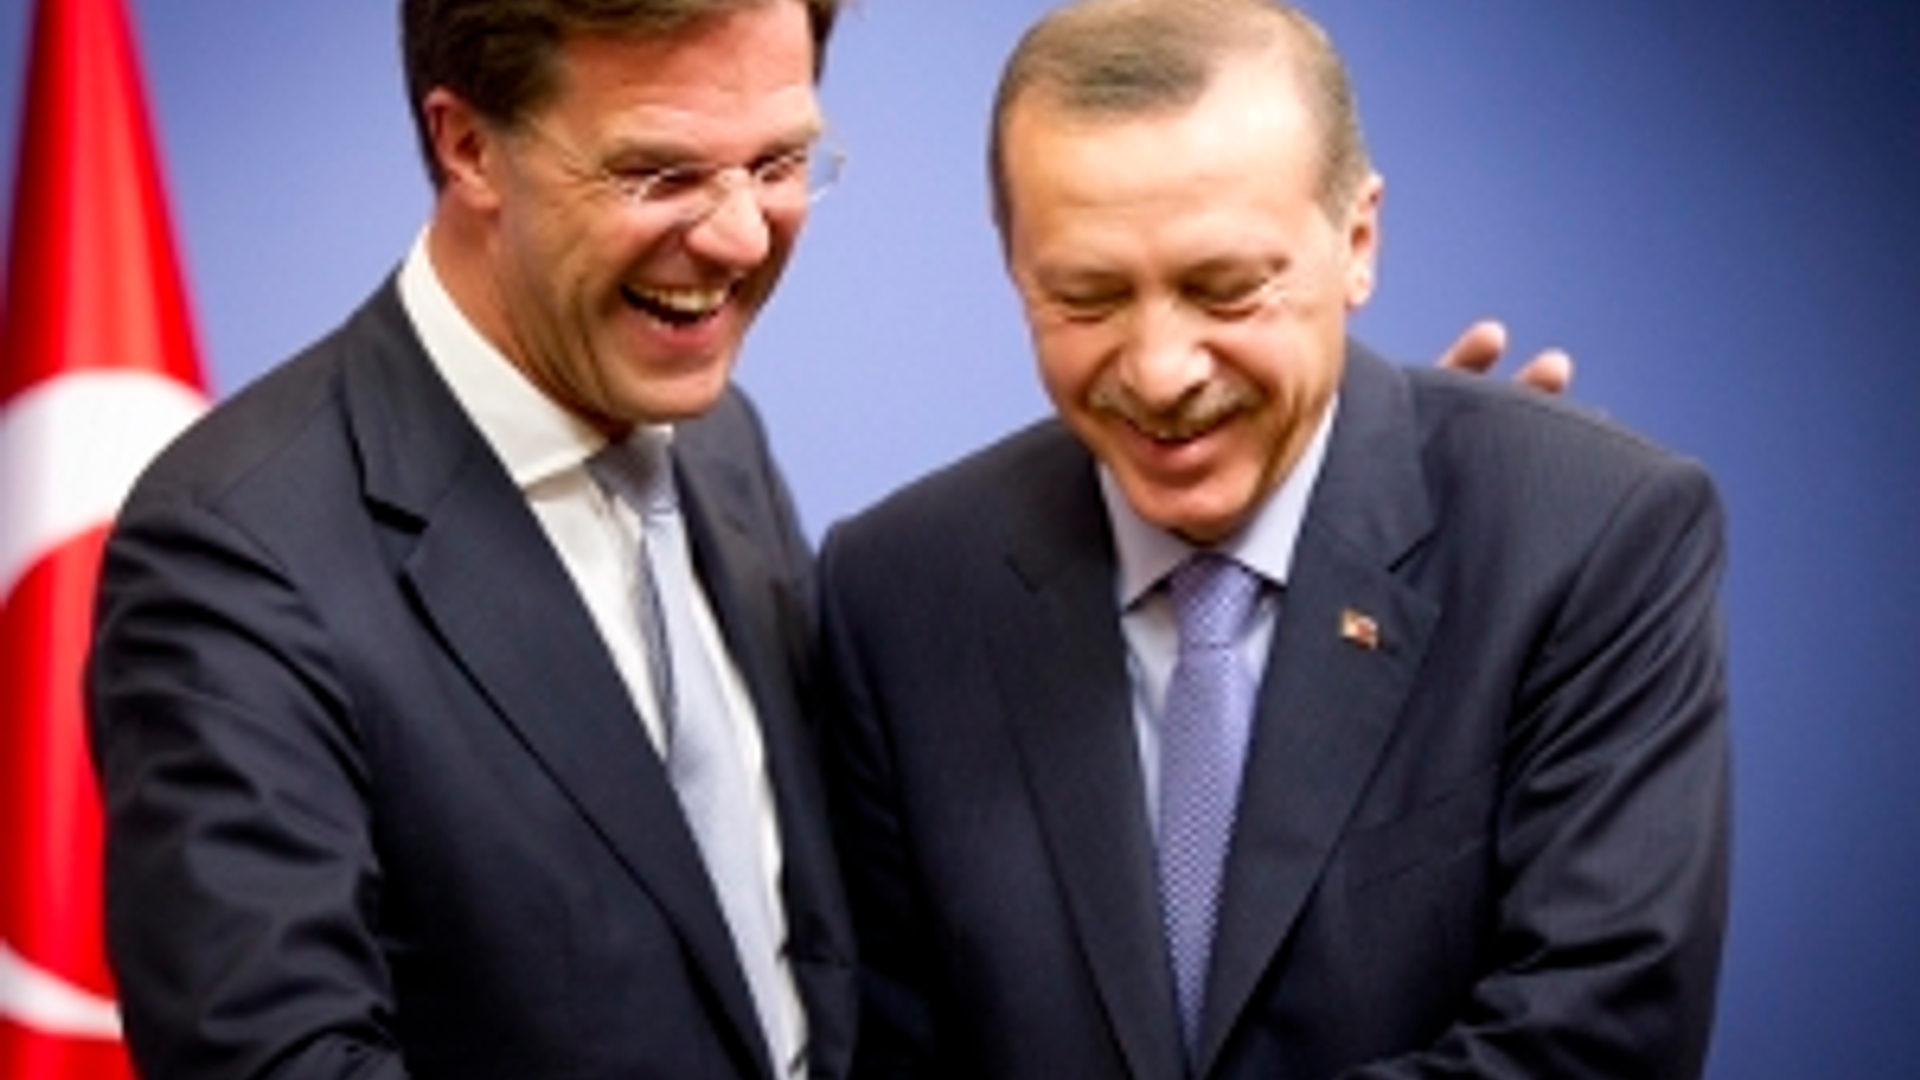 ANP-Rutte_Erdogan300.jpg